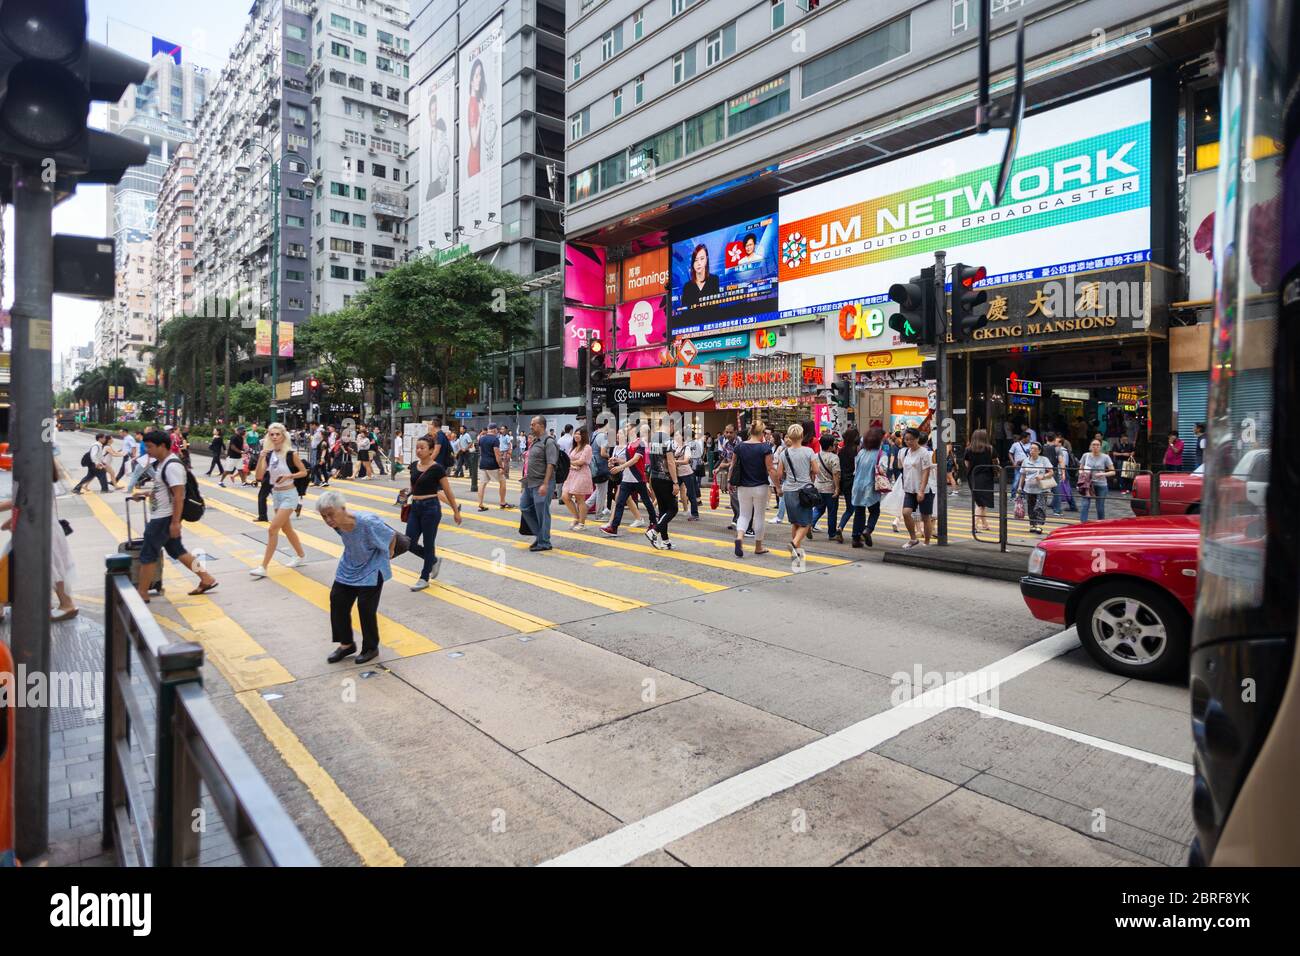 Hong Kong, Hong Kong - September, 26, 2017: People cross the road on zebra in the street of Hong Kong Stock Photo